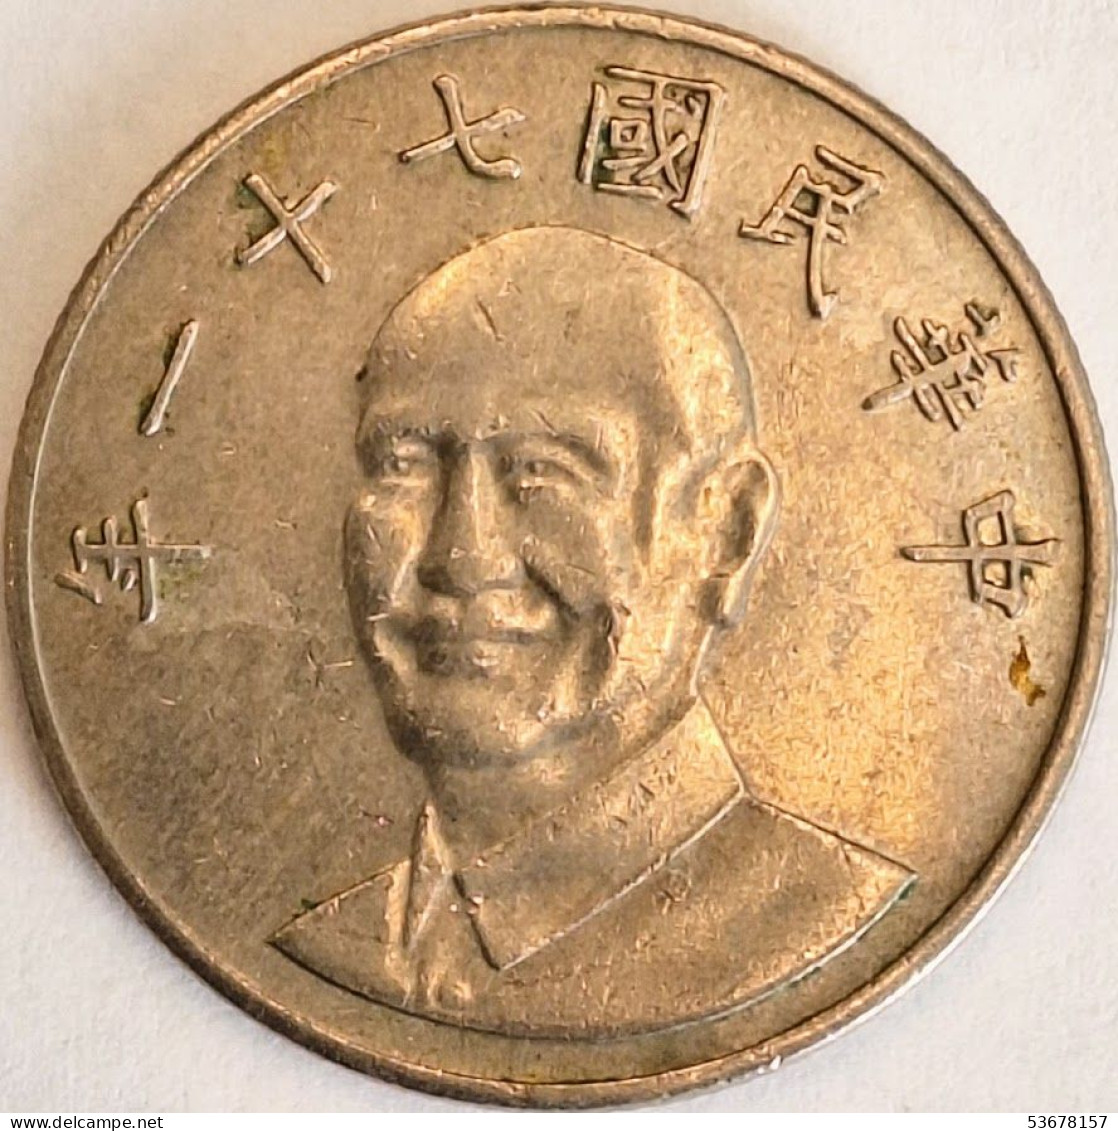 Taiwan - 10 Yuan 71(1982), Y# 553 (#3466) - Taiwan